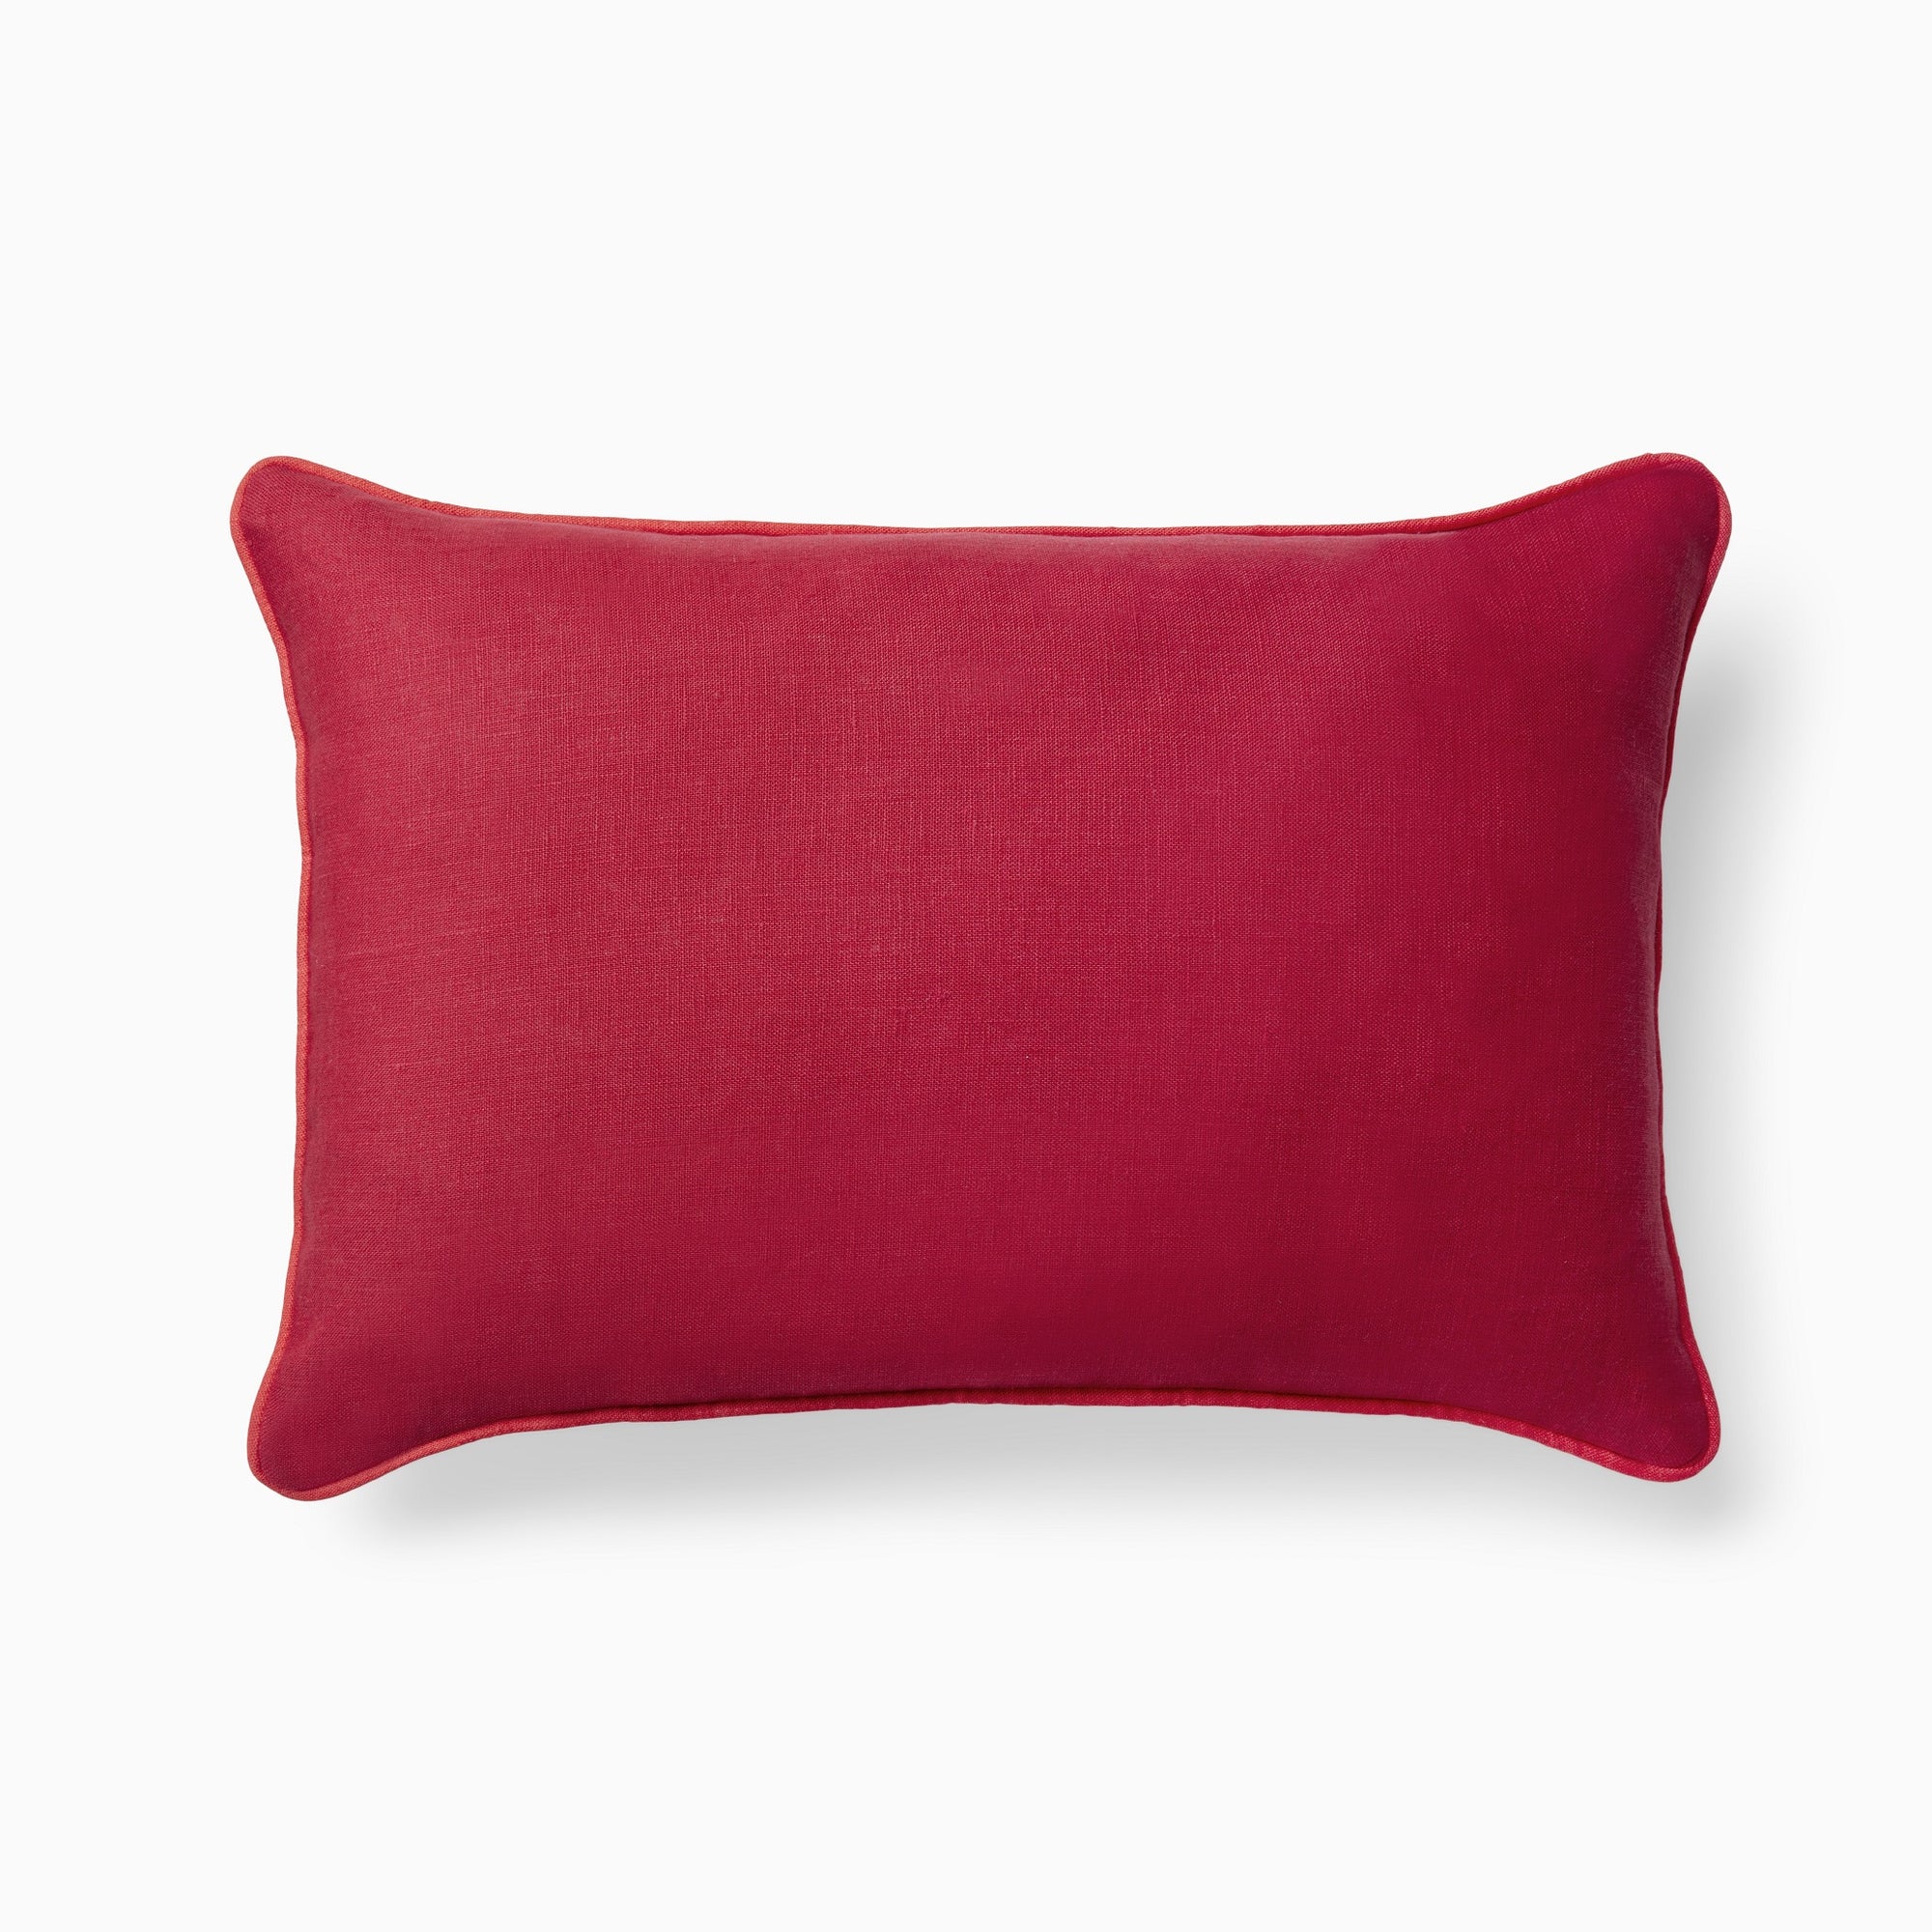 Clear Image of Sferra Manarola Decorative Pillow in Crimson/Poppy Front